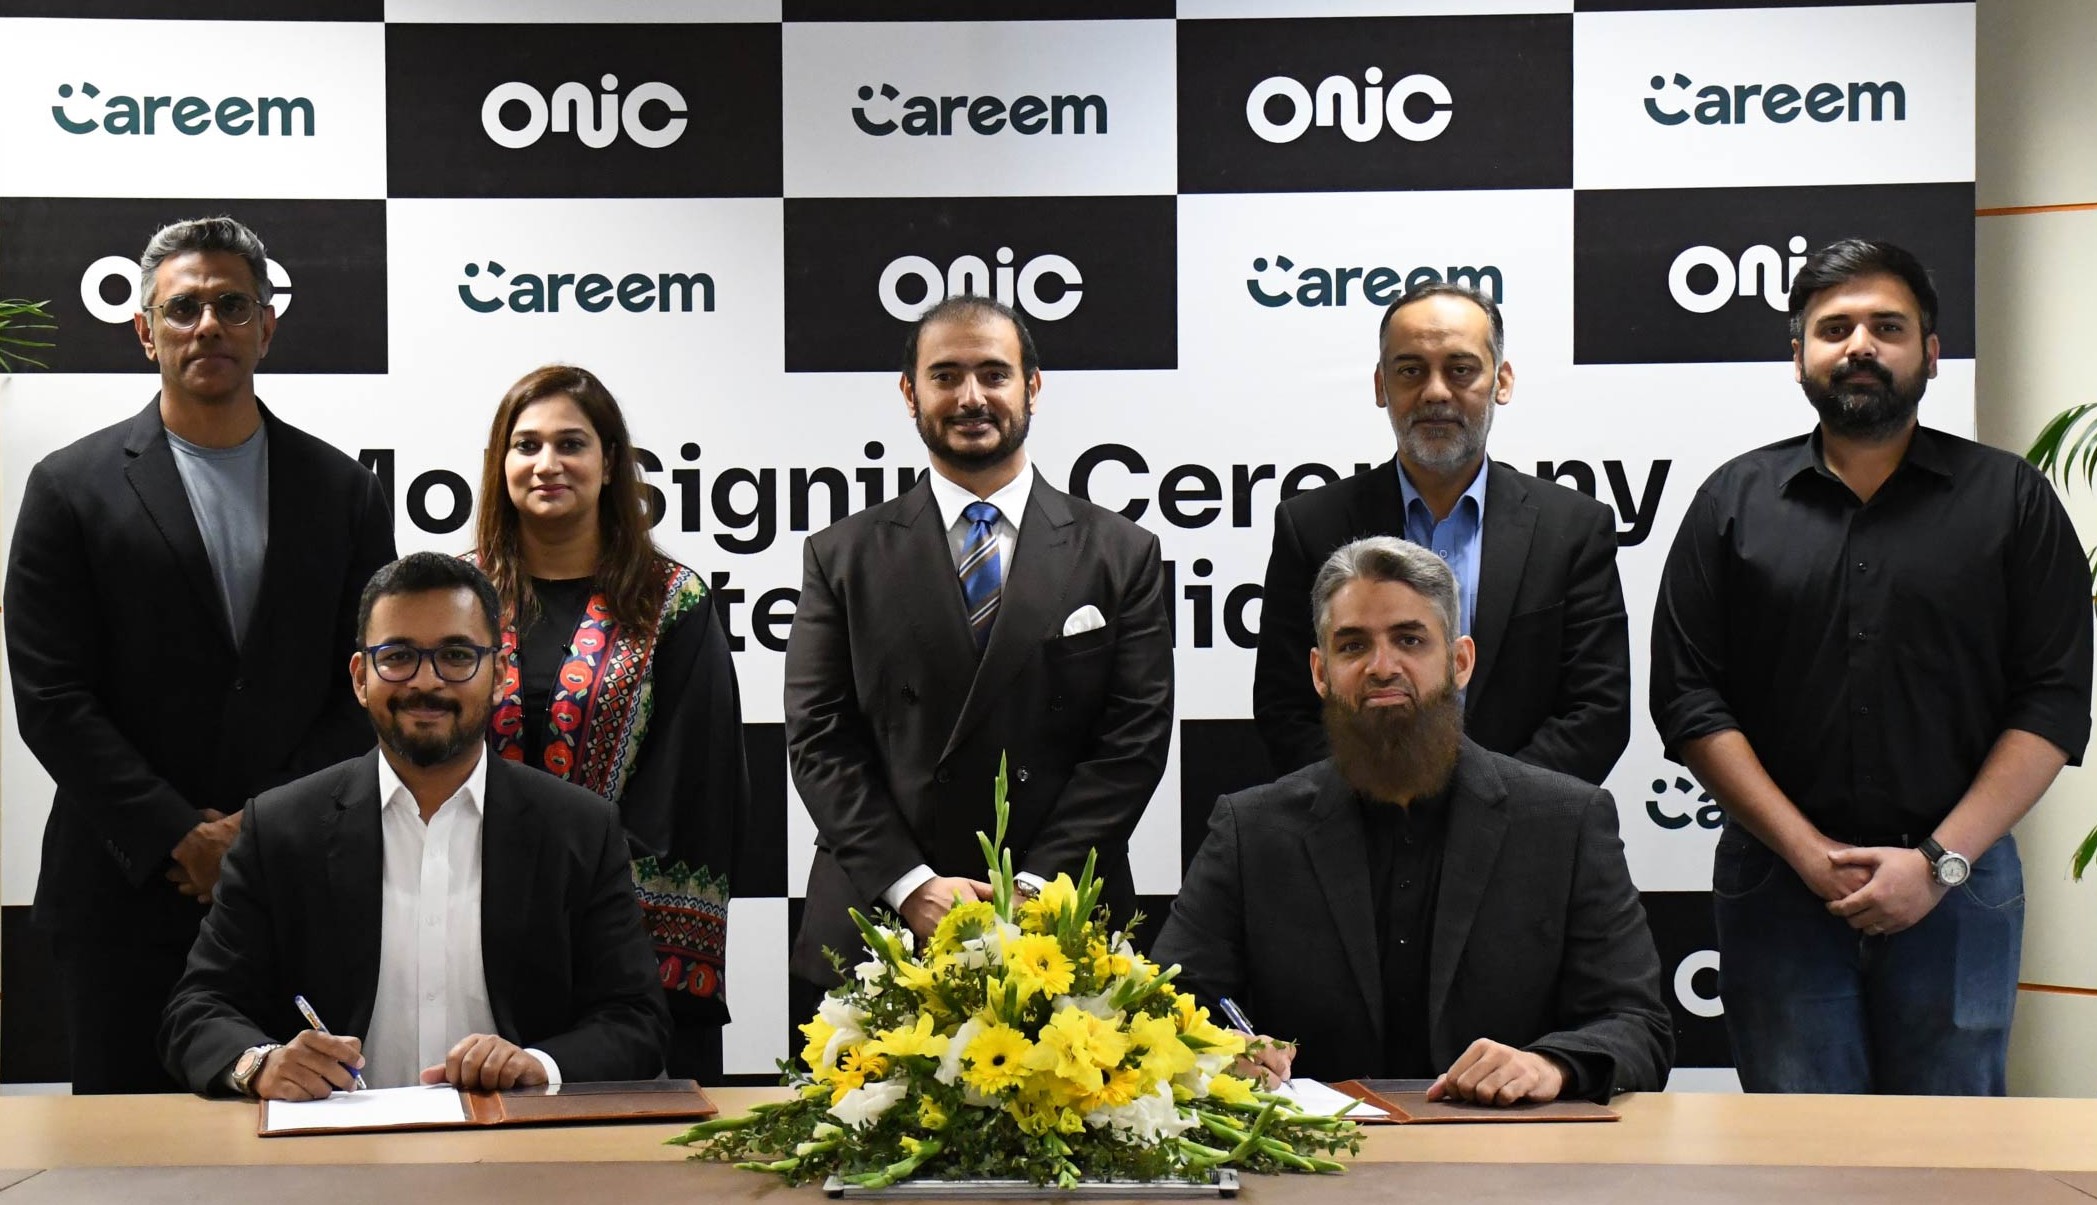 Onic & Careem sign MoU to forge strategic partnership